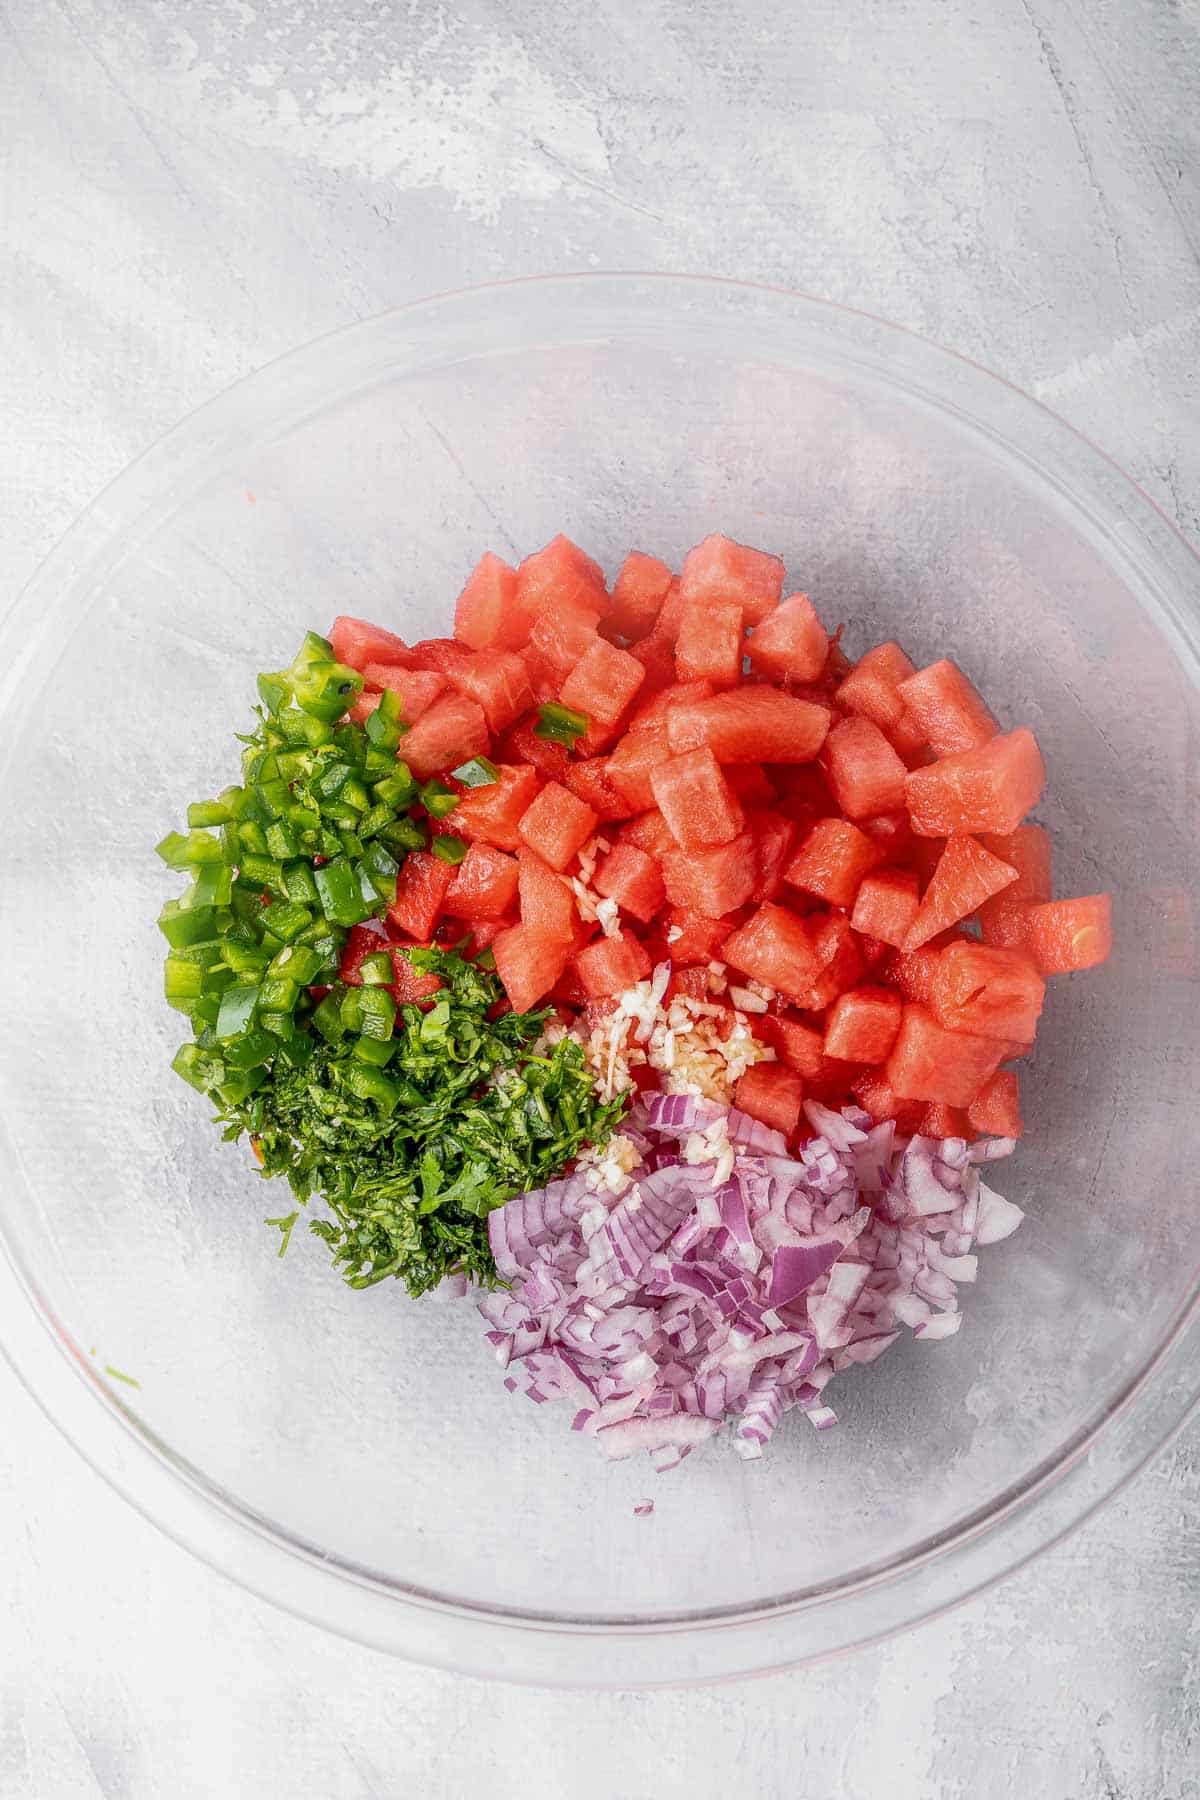 Large glass bowl of ingredients for Watermelon Salsa - watermelon, red onion, jalapeño, cilantro, garlic, lime juice, salt.